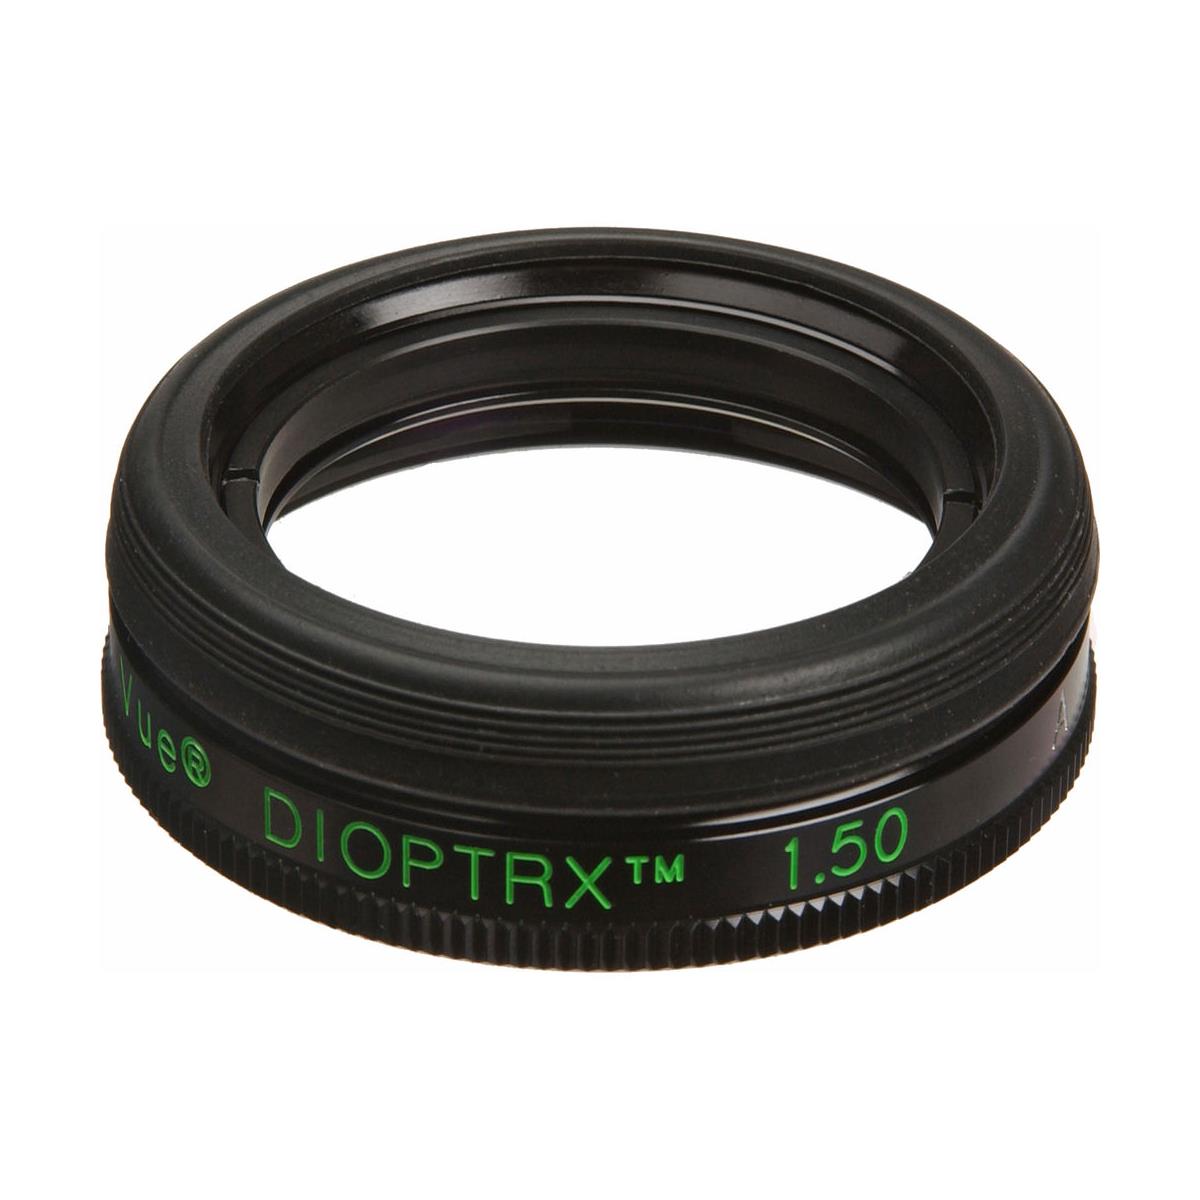 Image of Tele Vue Dioptrx Astigmatism Correcting Lens - 1.50